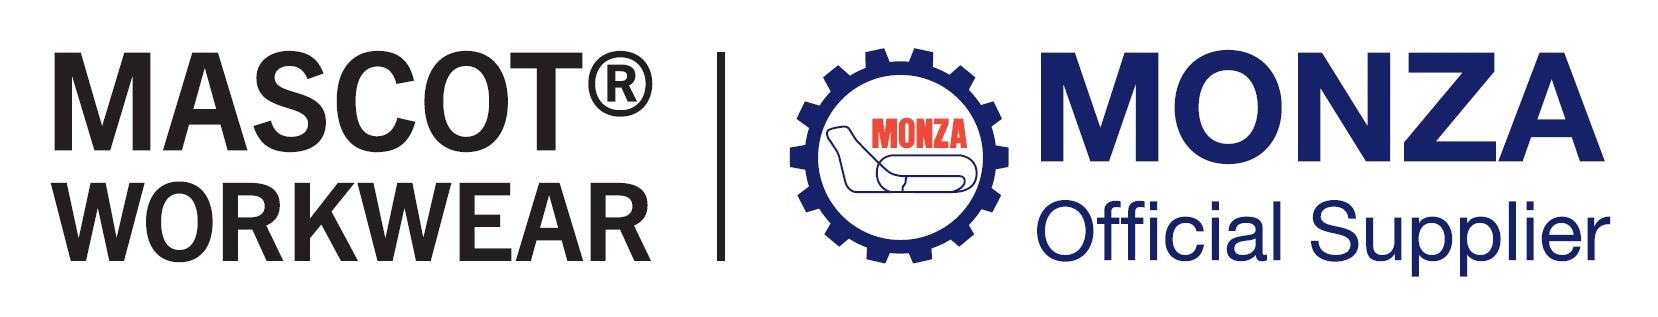 2019 - MASCOT<span>® WORKWEAR -  Monza - logo</span>